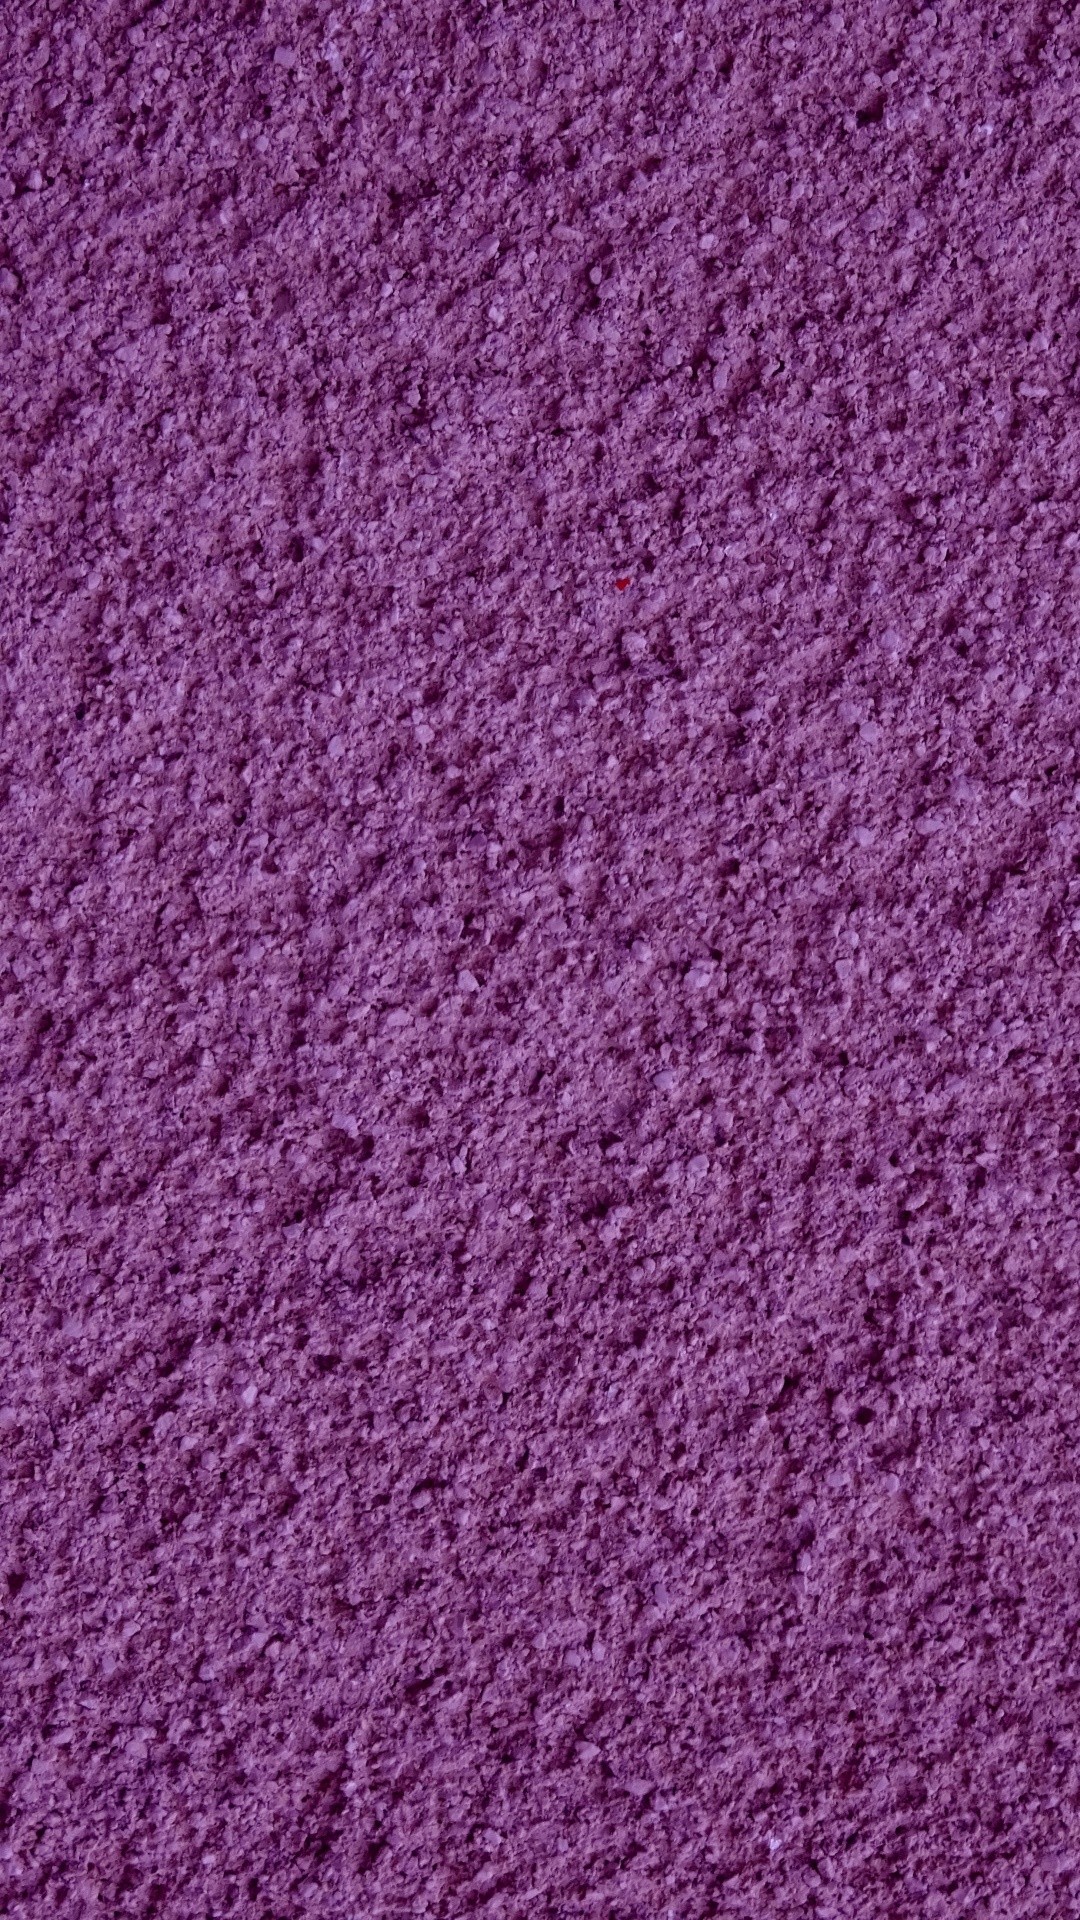 Purple Rough Texture iPhone Wallpaper resolution 1080x1920